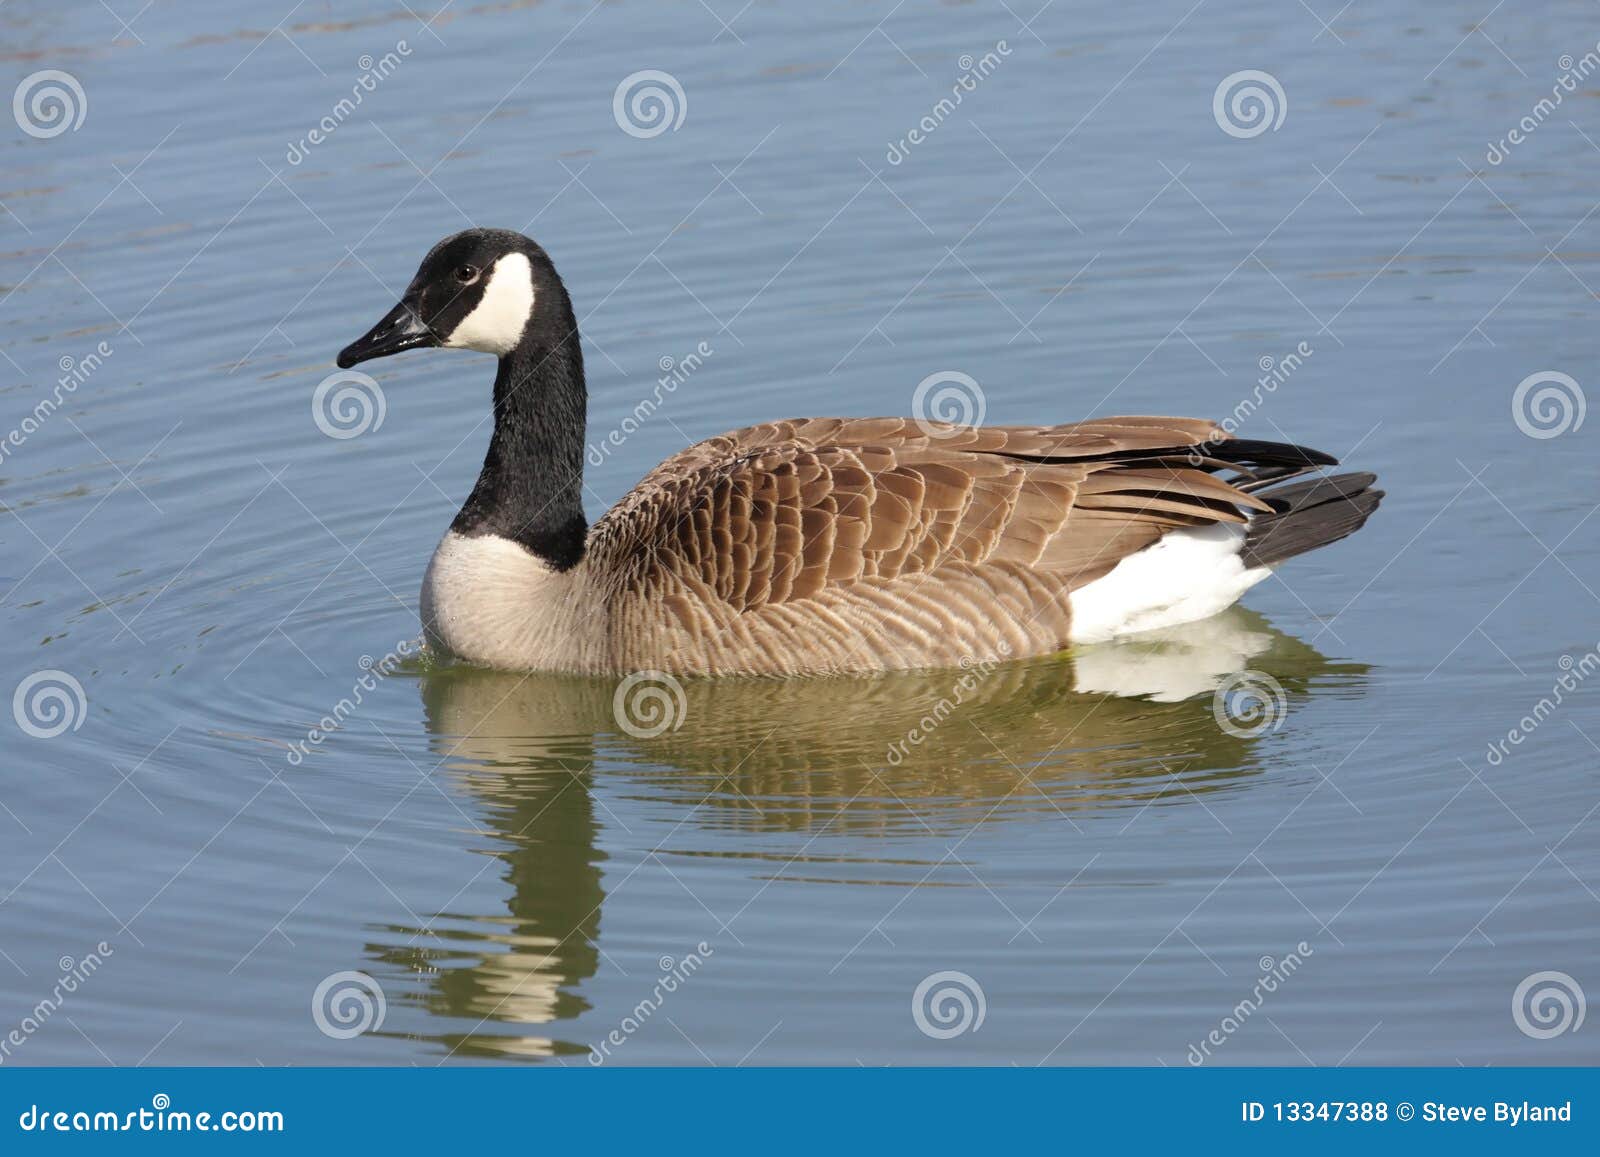 canada goose (branta canadensis) swimming